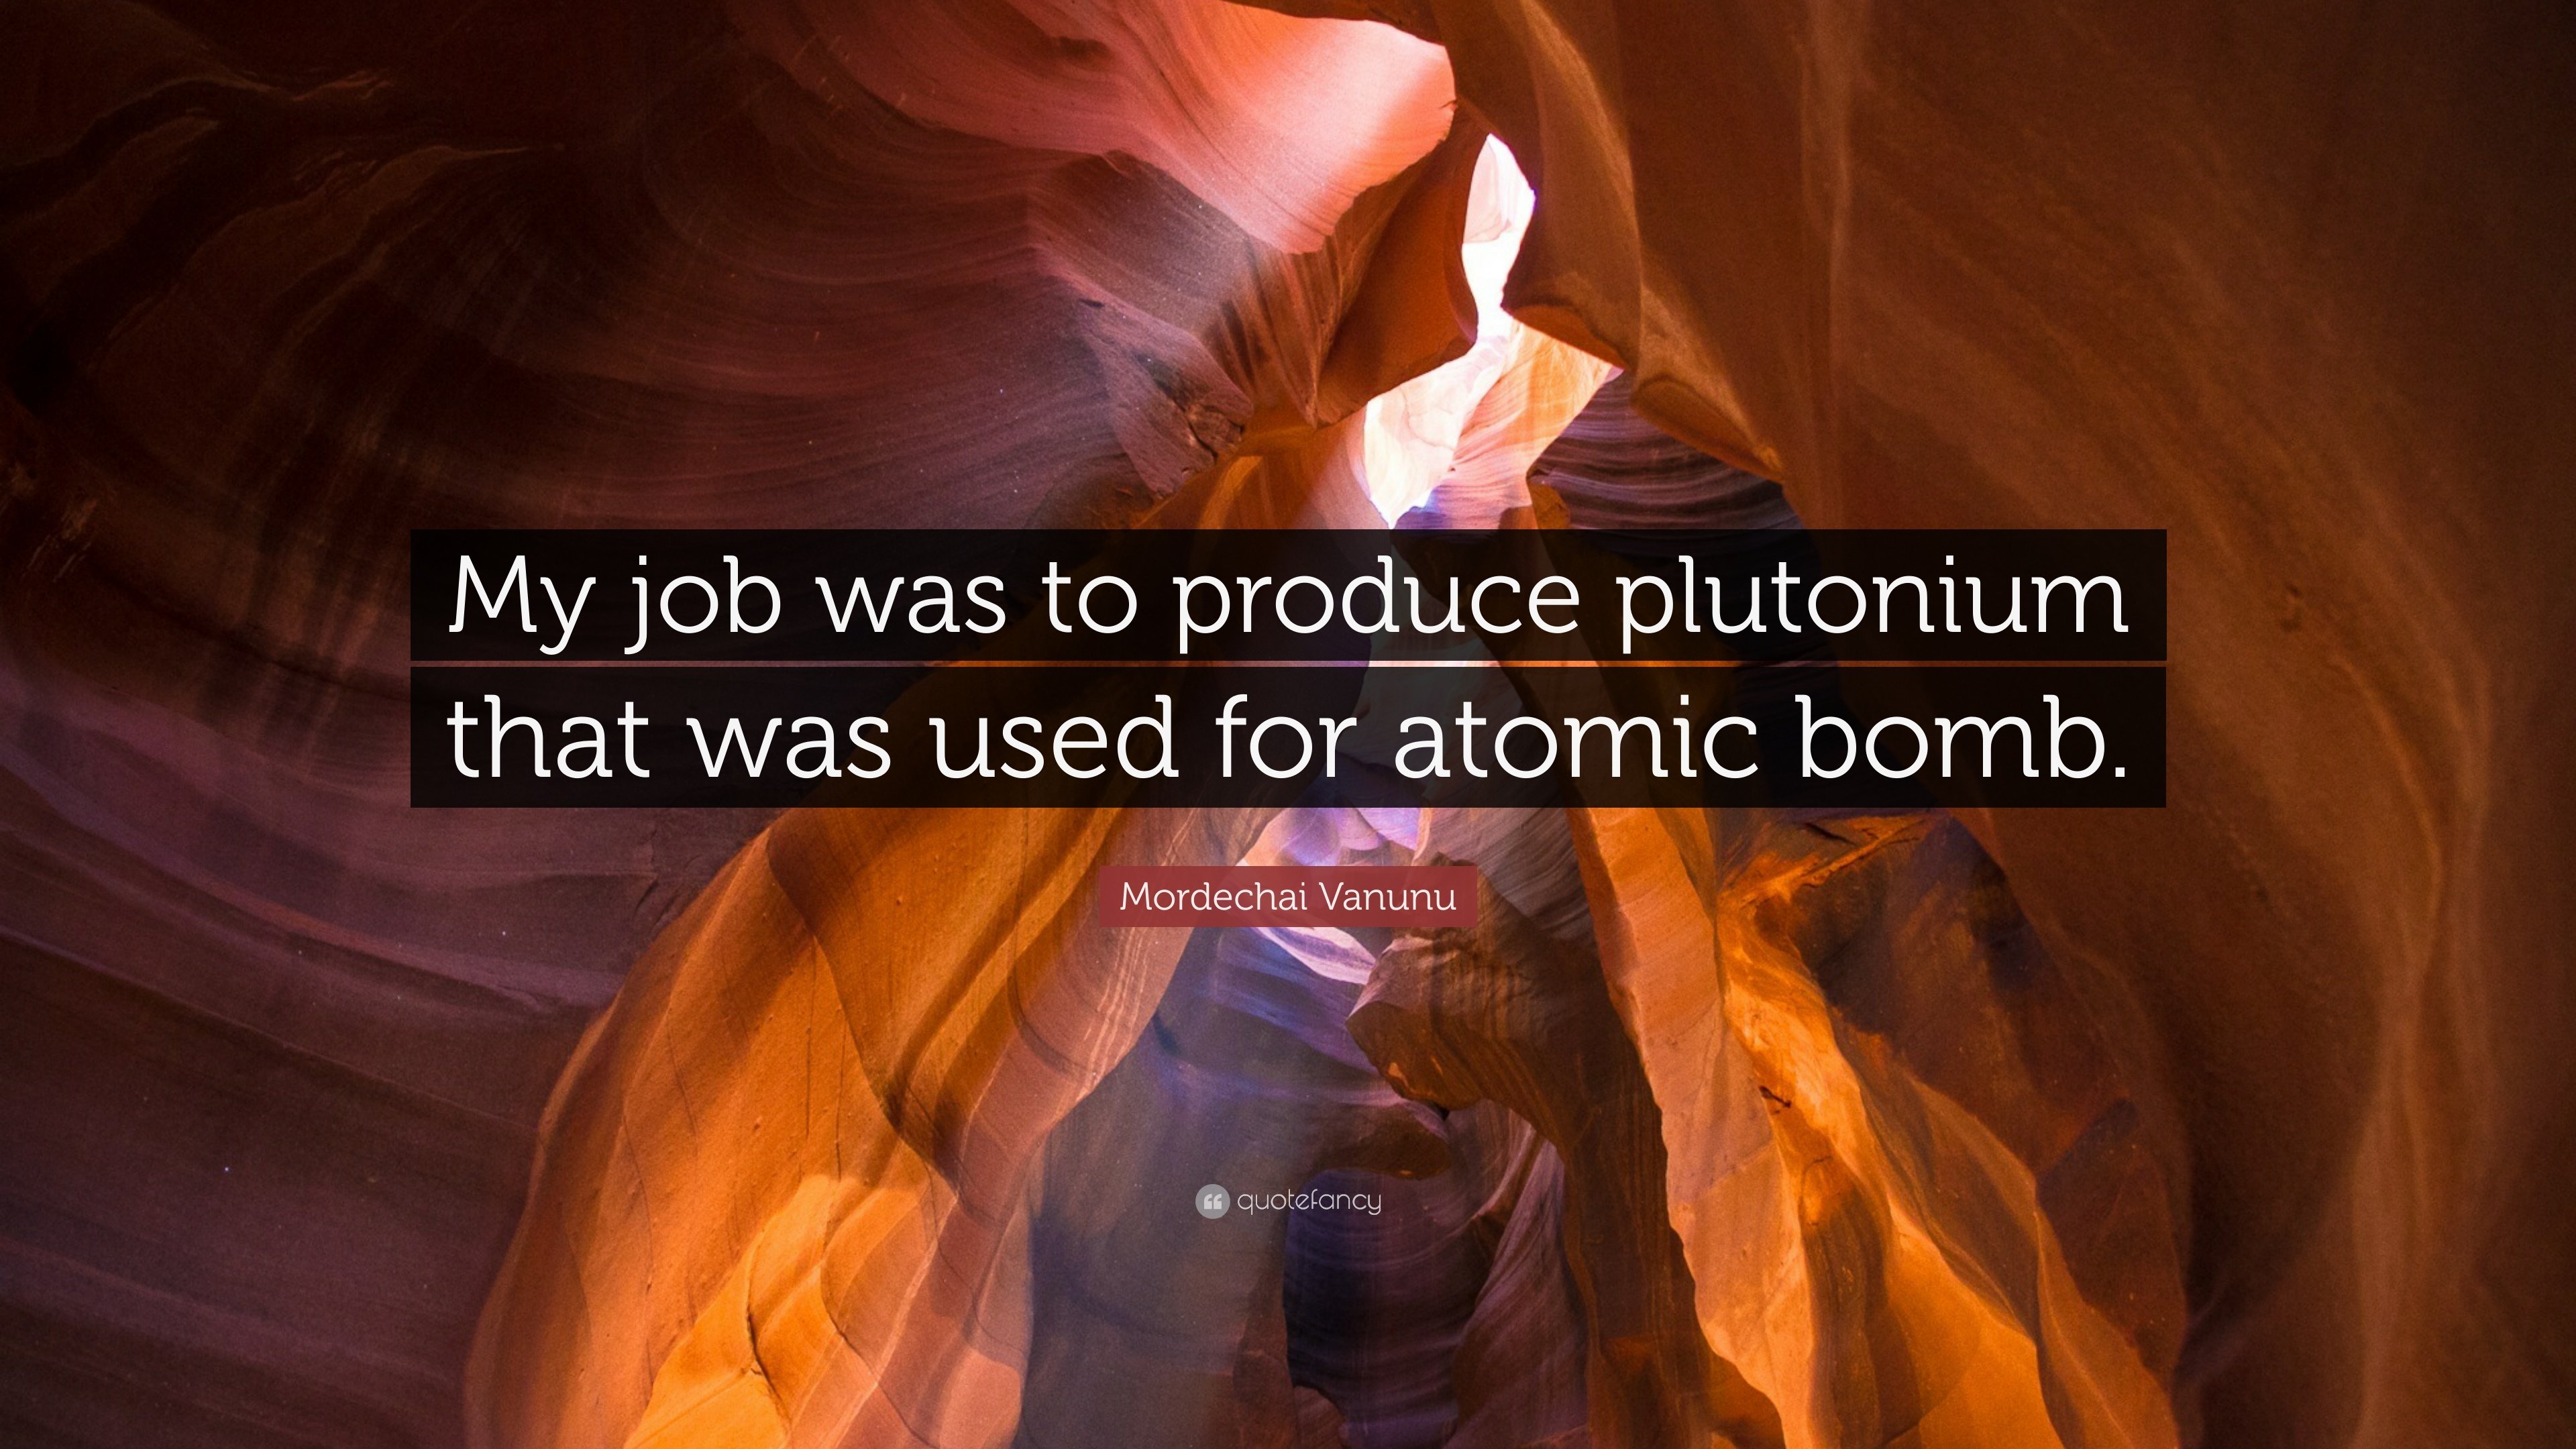 Mordechai Vanunu Quote: “My job was to produce plutonium